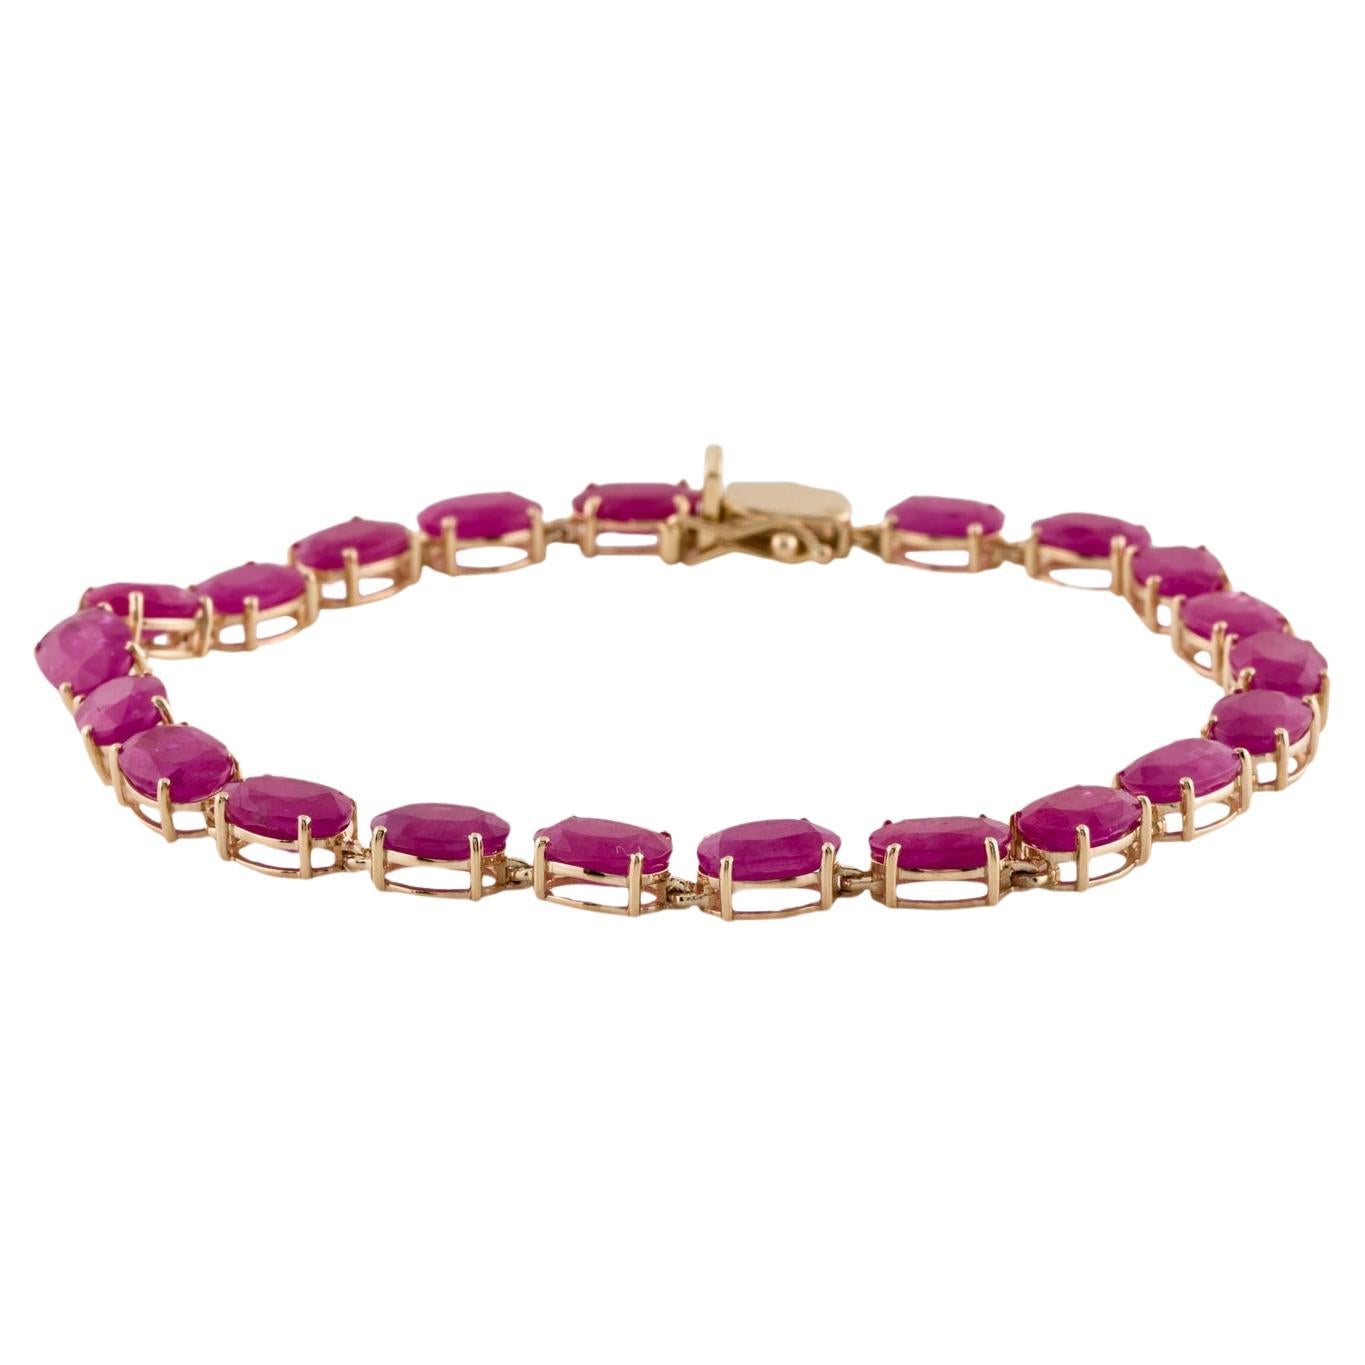 14K 19.13ctw Ruby Tennis Bracelet - Exquisite Elegance, Timeless Luxury Design